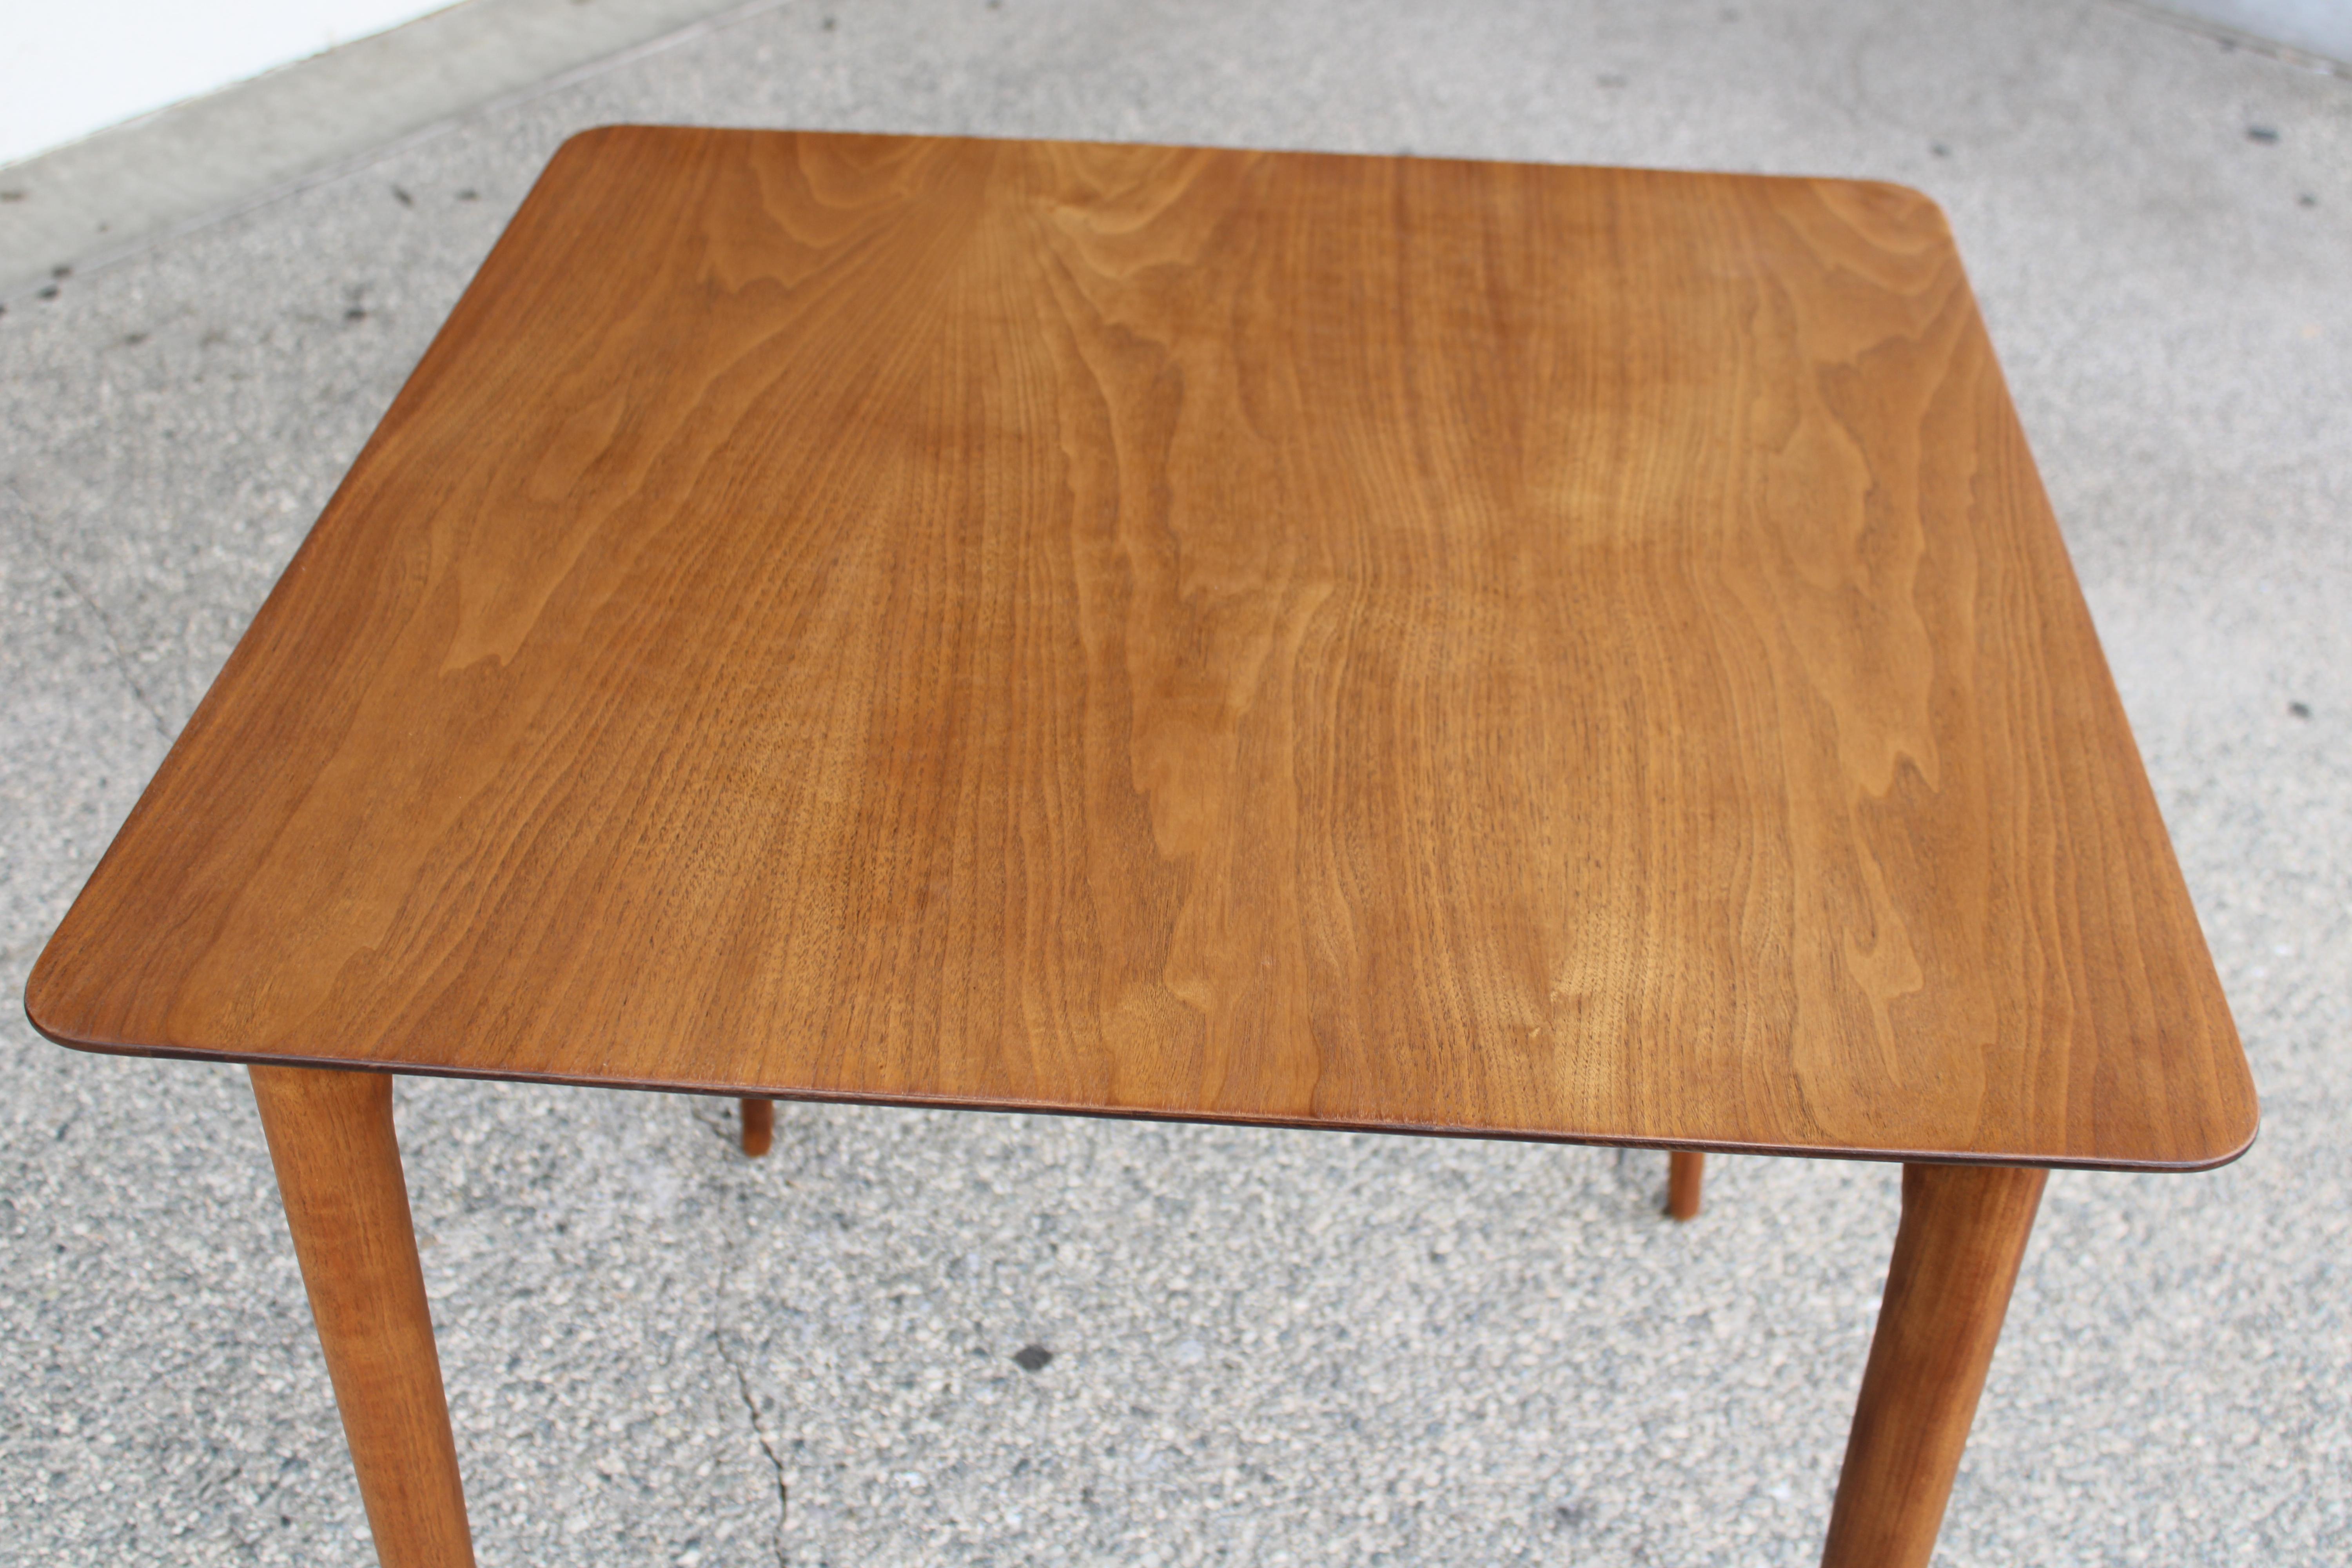 American Widdicomb Table Designed by T.H. Robsjohn - Gibbings For Sale